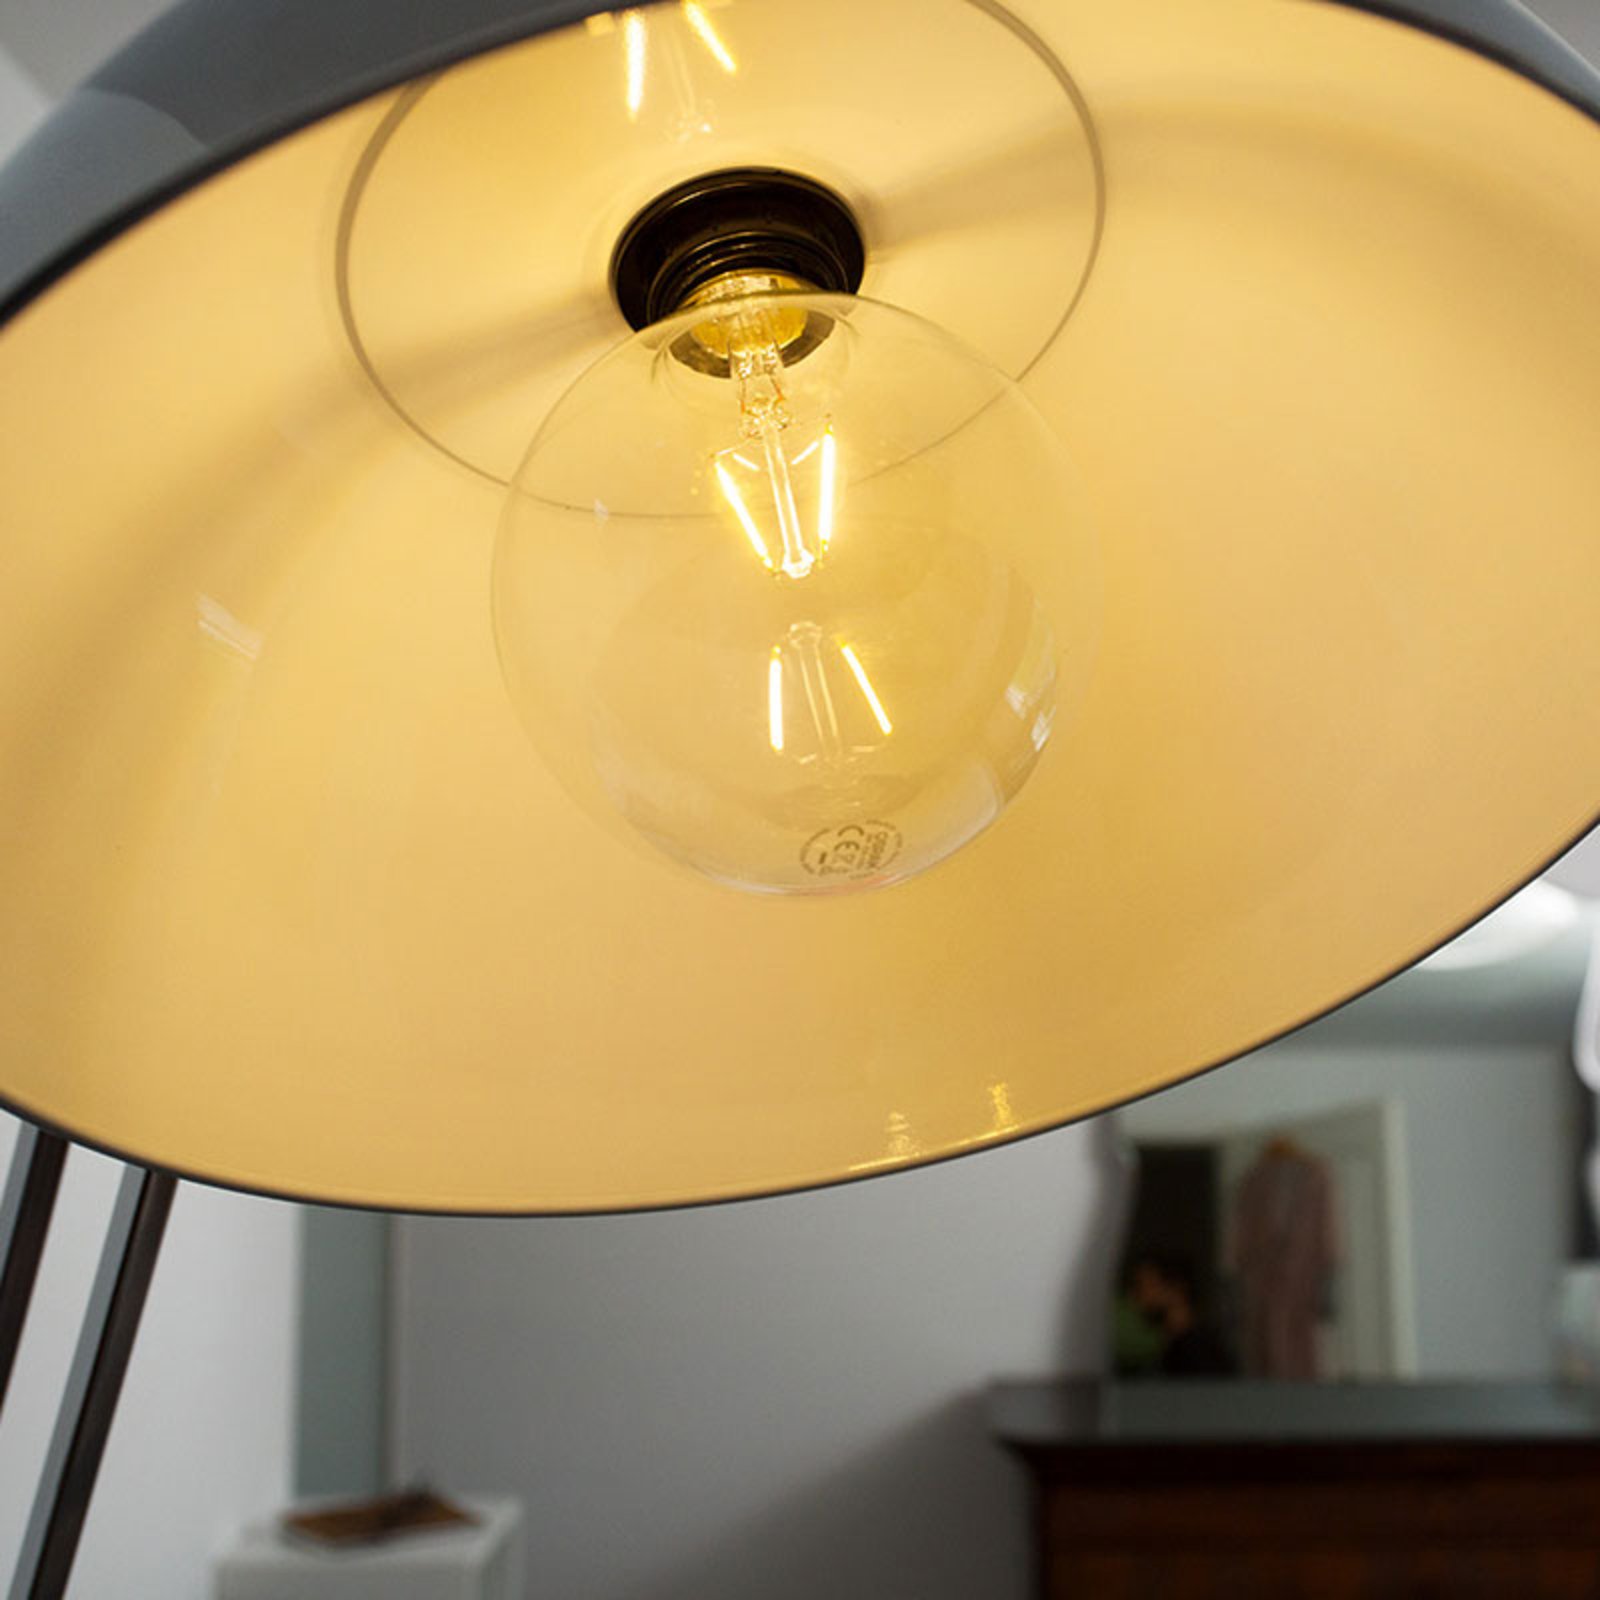 LED-Globelampe E27 2,5W 827 Retrofit